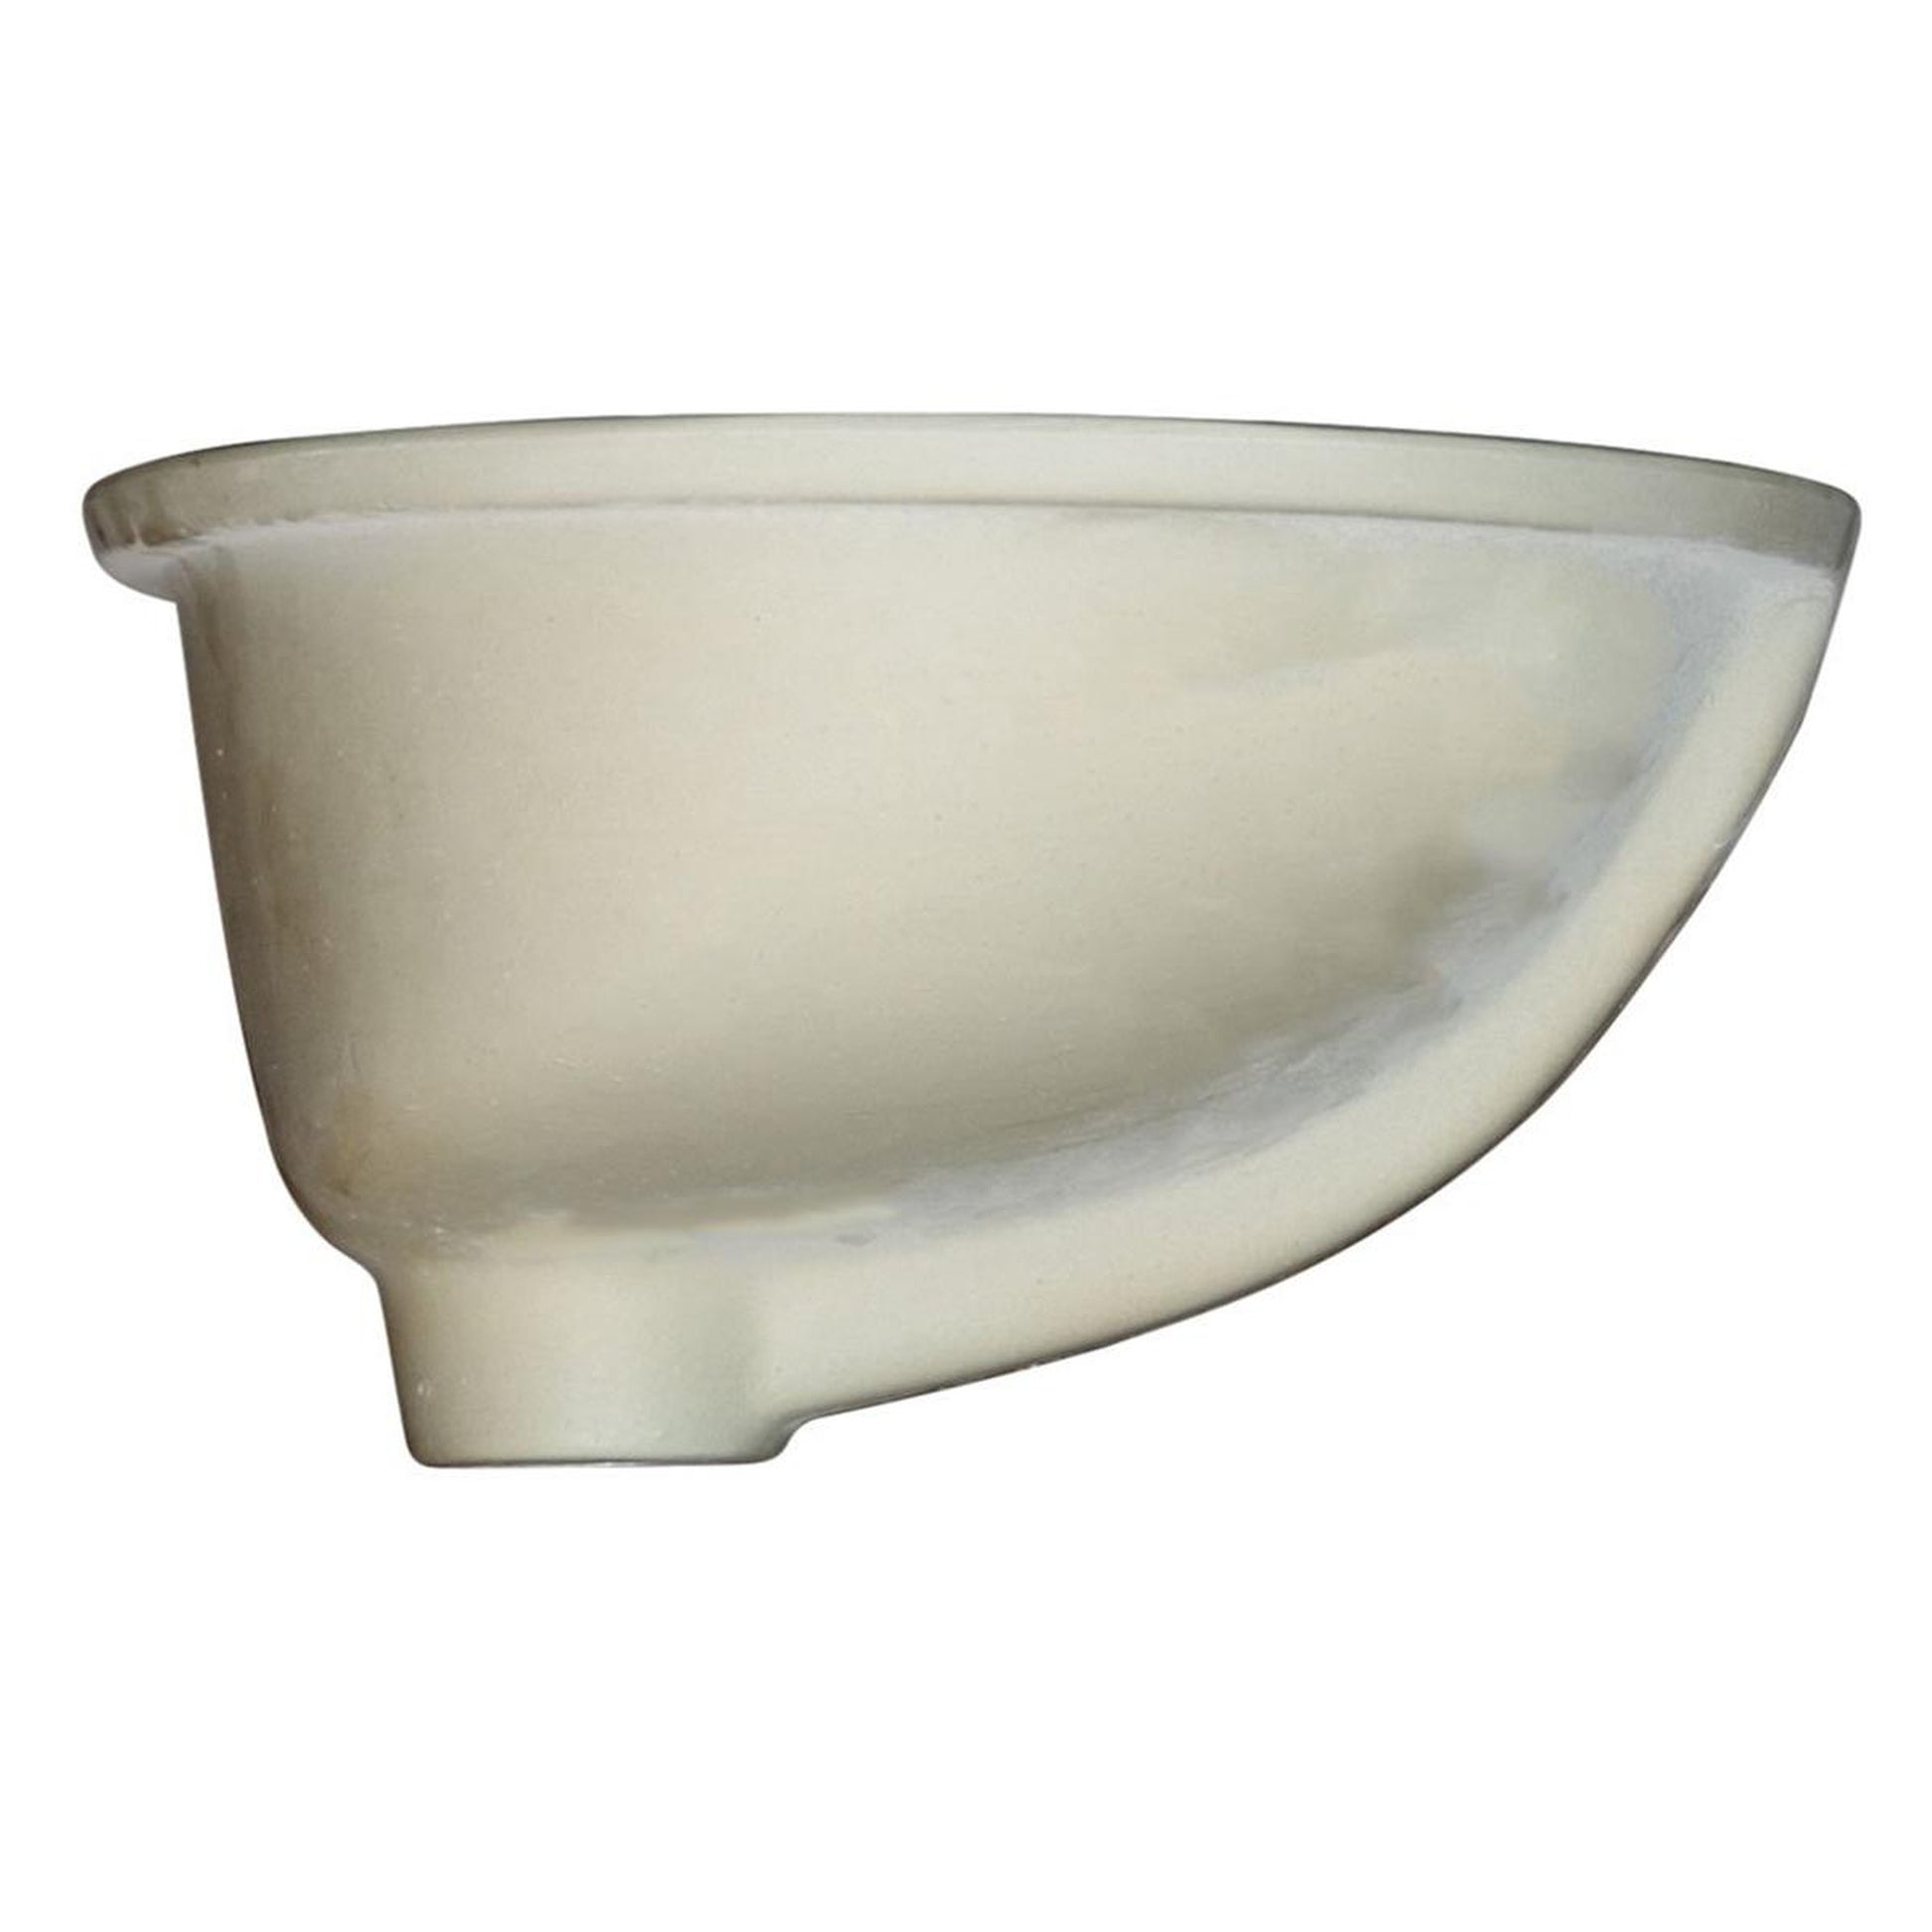 Pelican Int'l Pearl Series PL-3059 17 1/4" x 14" Bone Porcelain Undermount Bathroom Sink